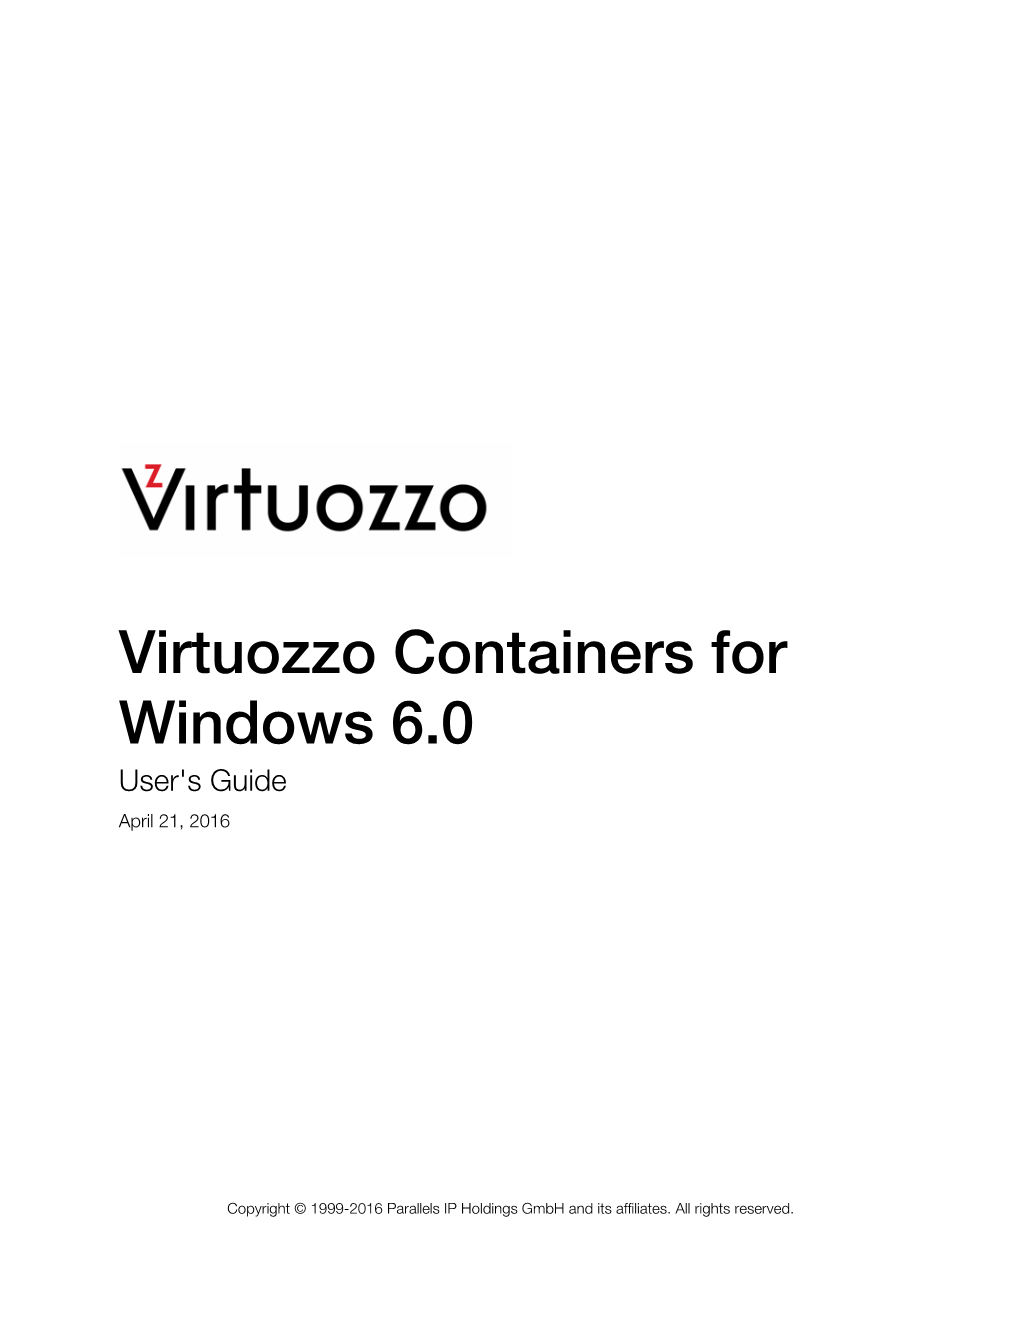 Virtuozzo Containers for Windows 6.0 User's Guide April 21, 2016